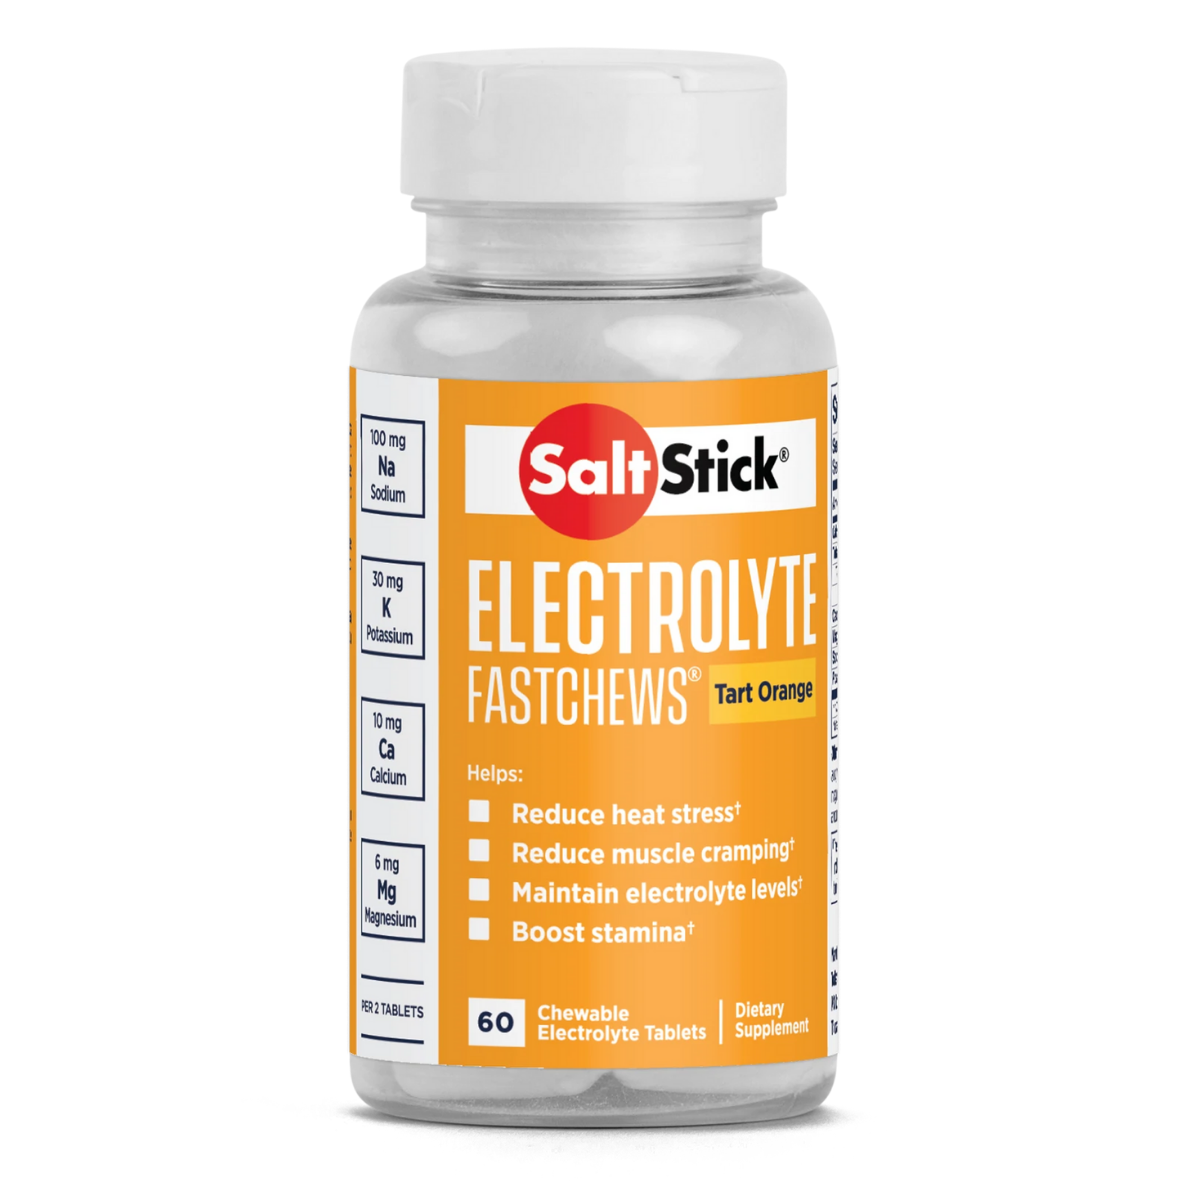 SaltStick Tart Orange Electrolyte FastChews tablets